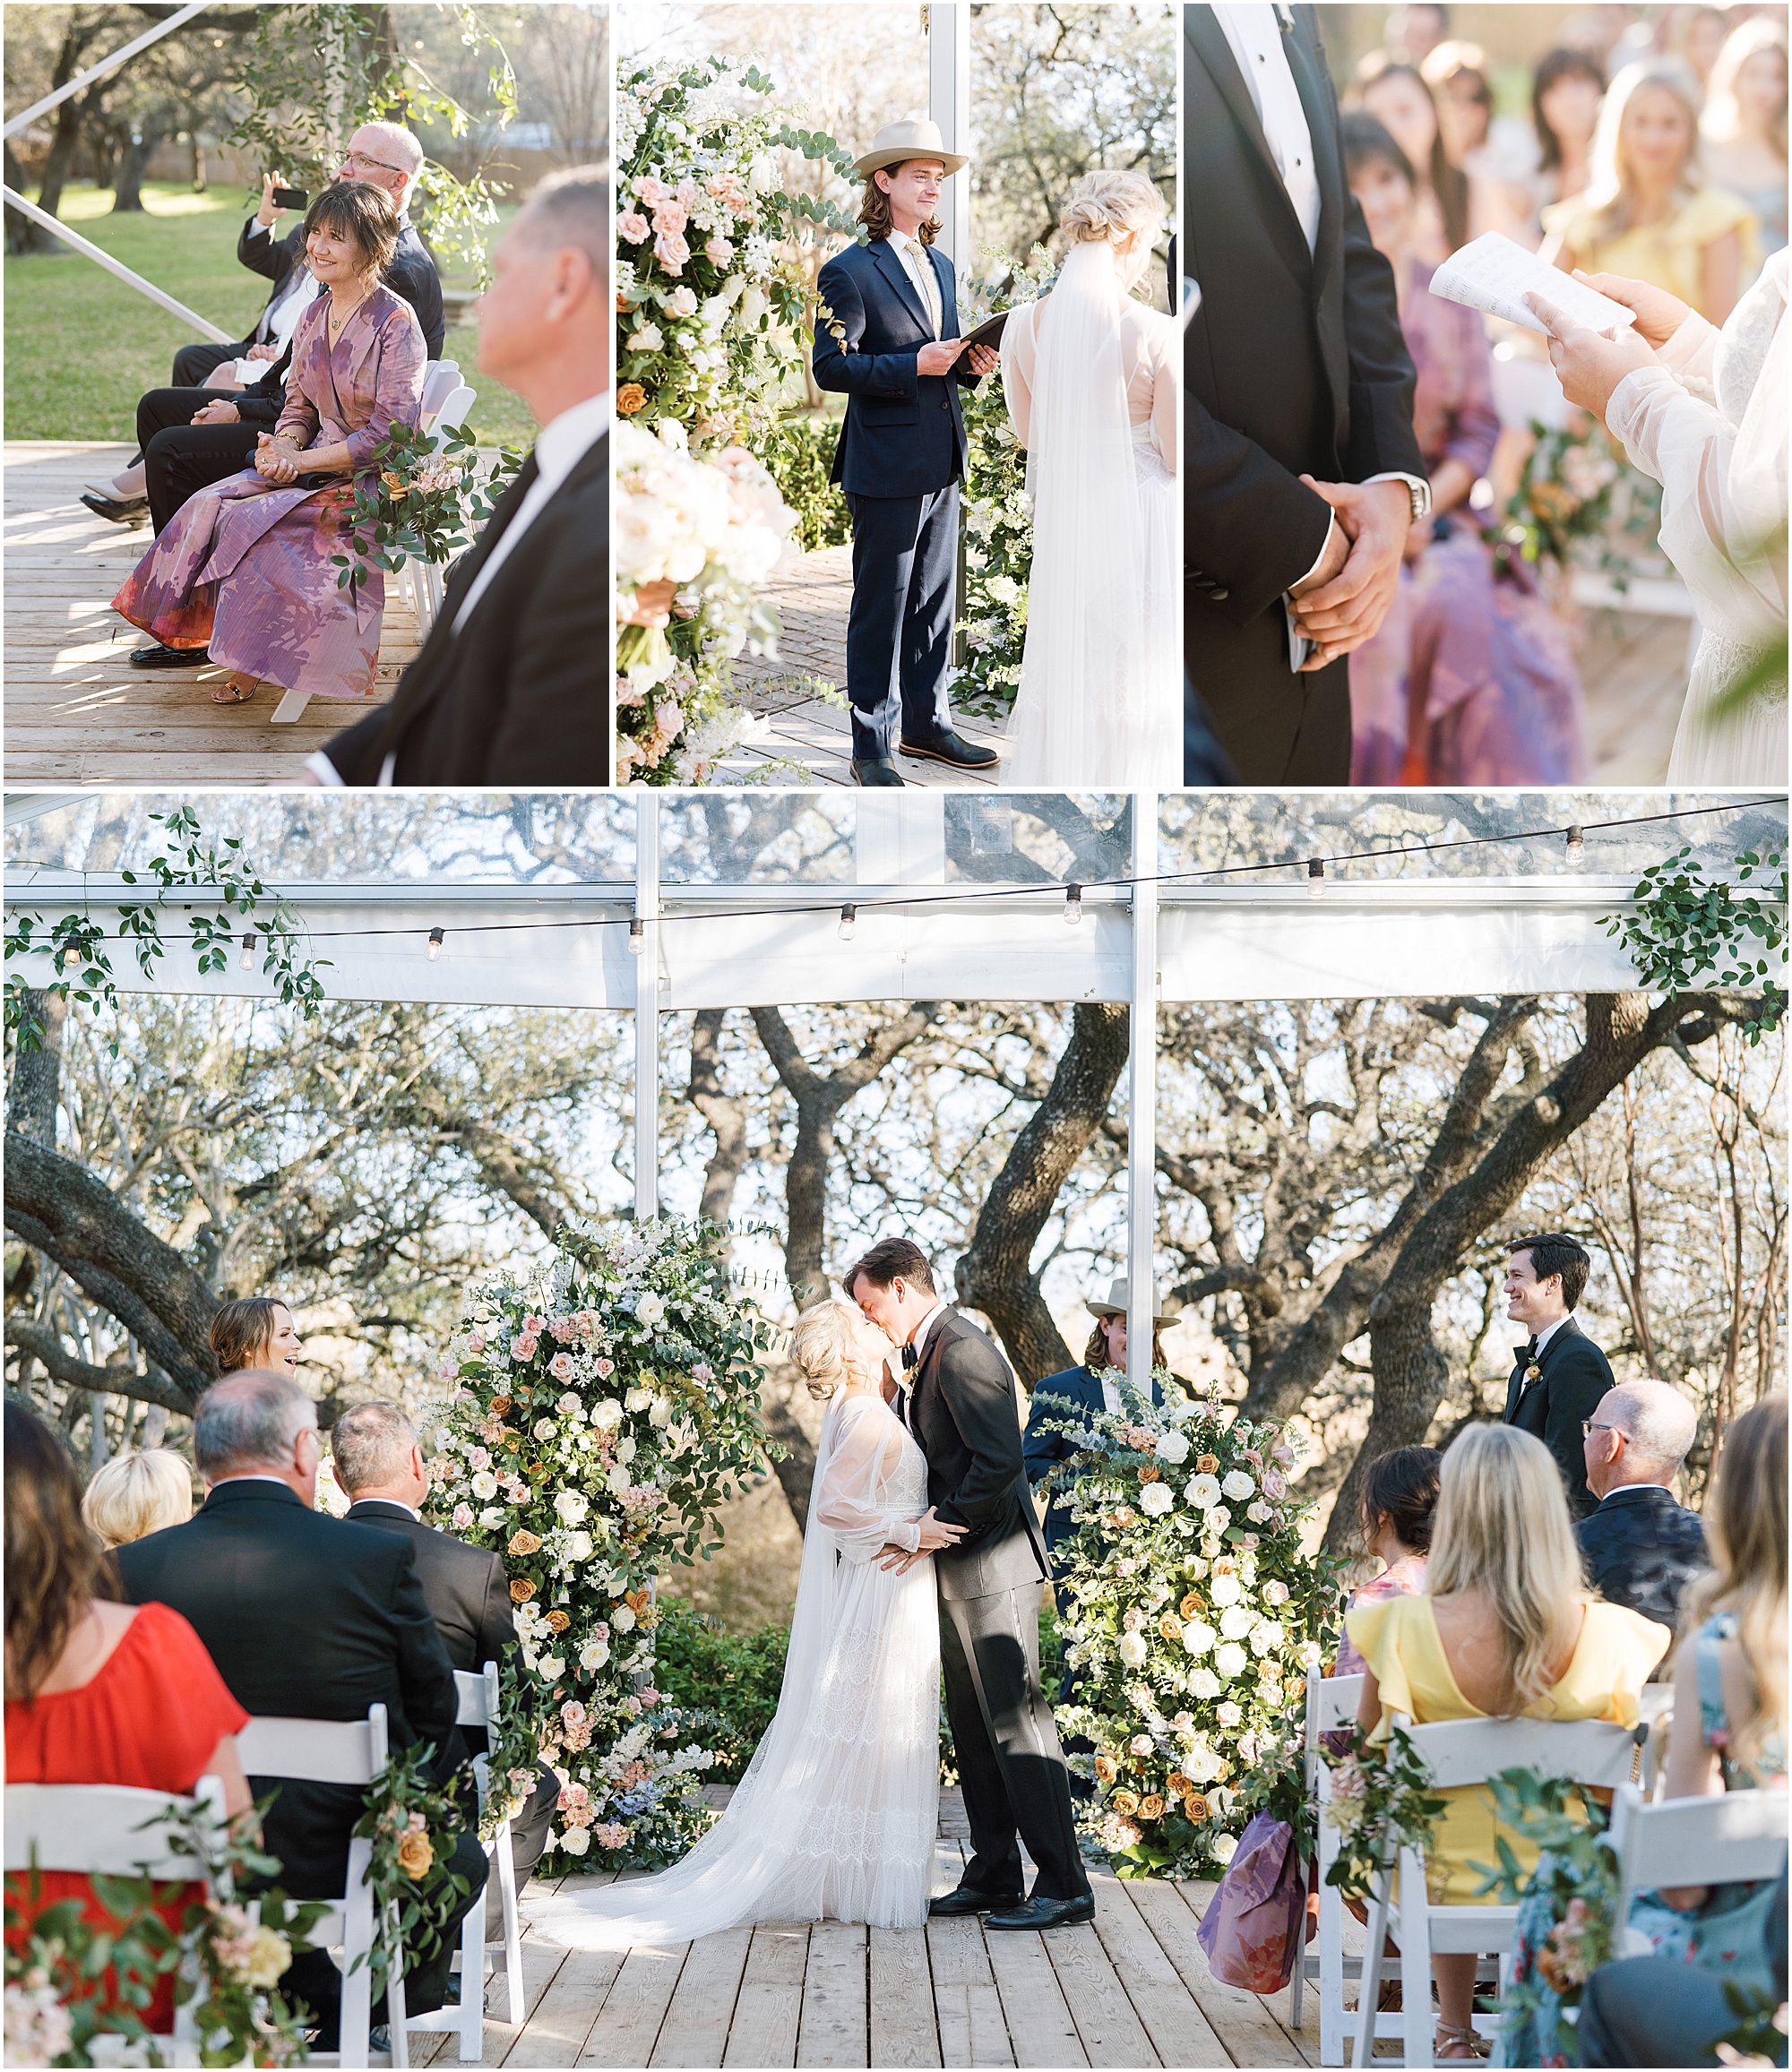 Mattie's Austin Wedding | Texas Garden Party Wedding | Austin, Texas Wedding Venues | www.baileestarrphotography.com